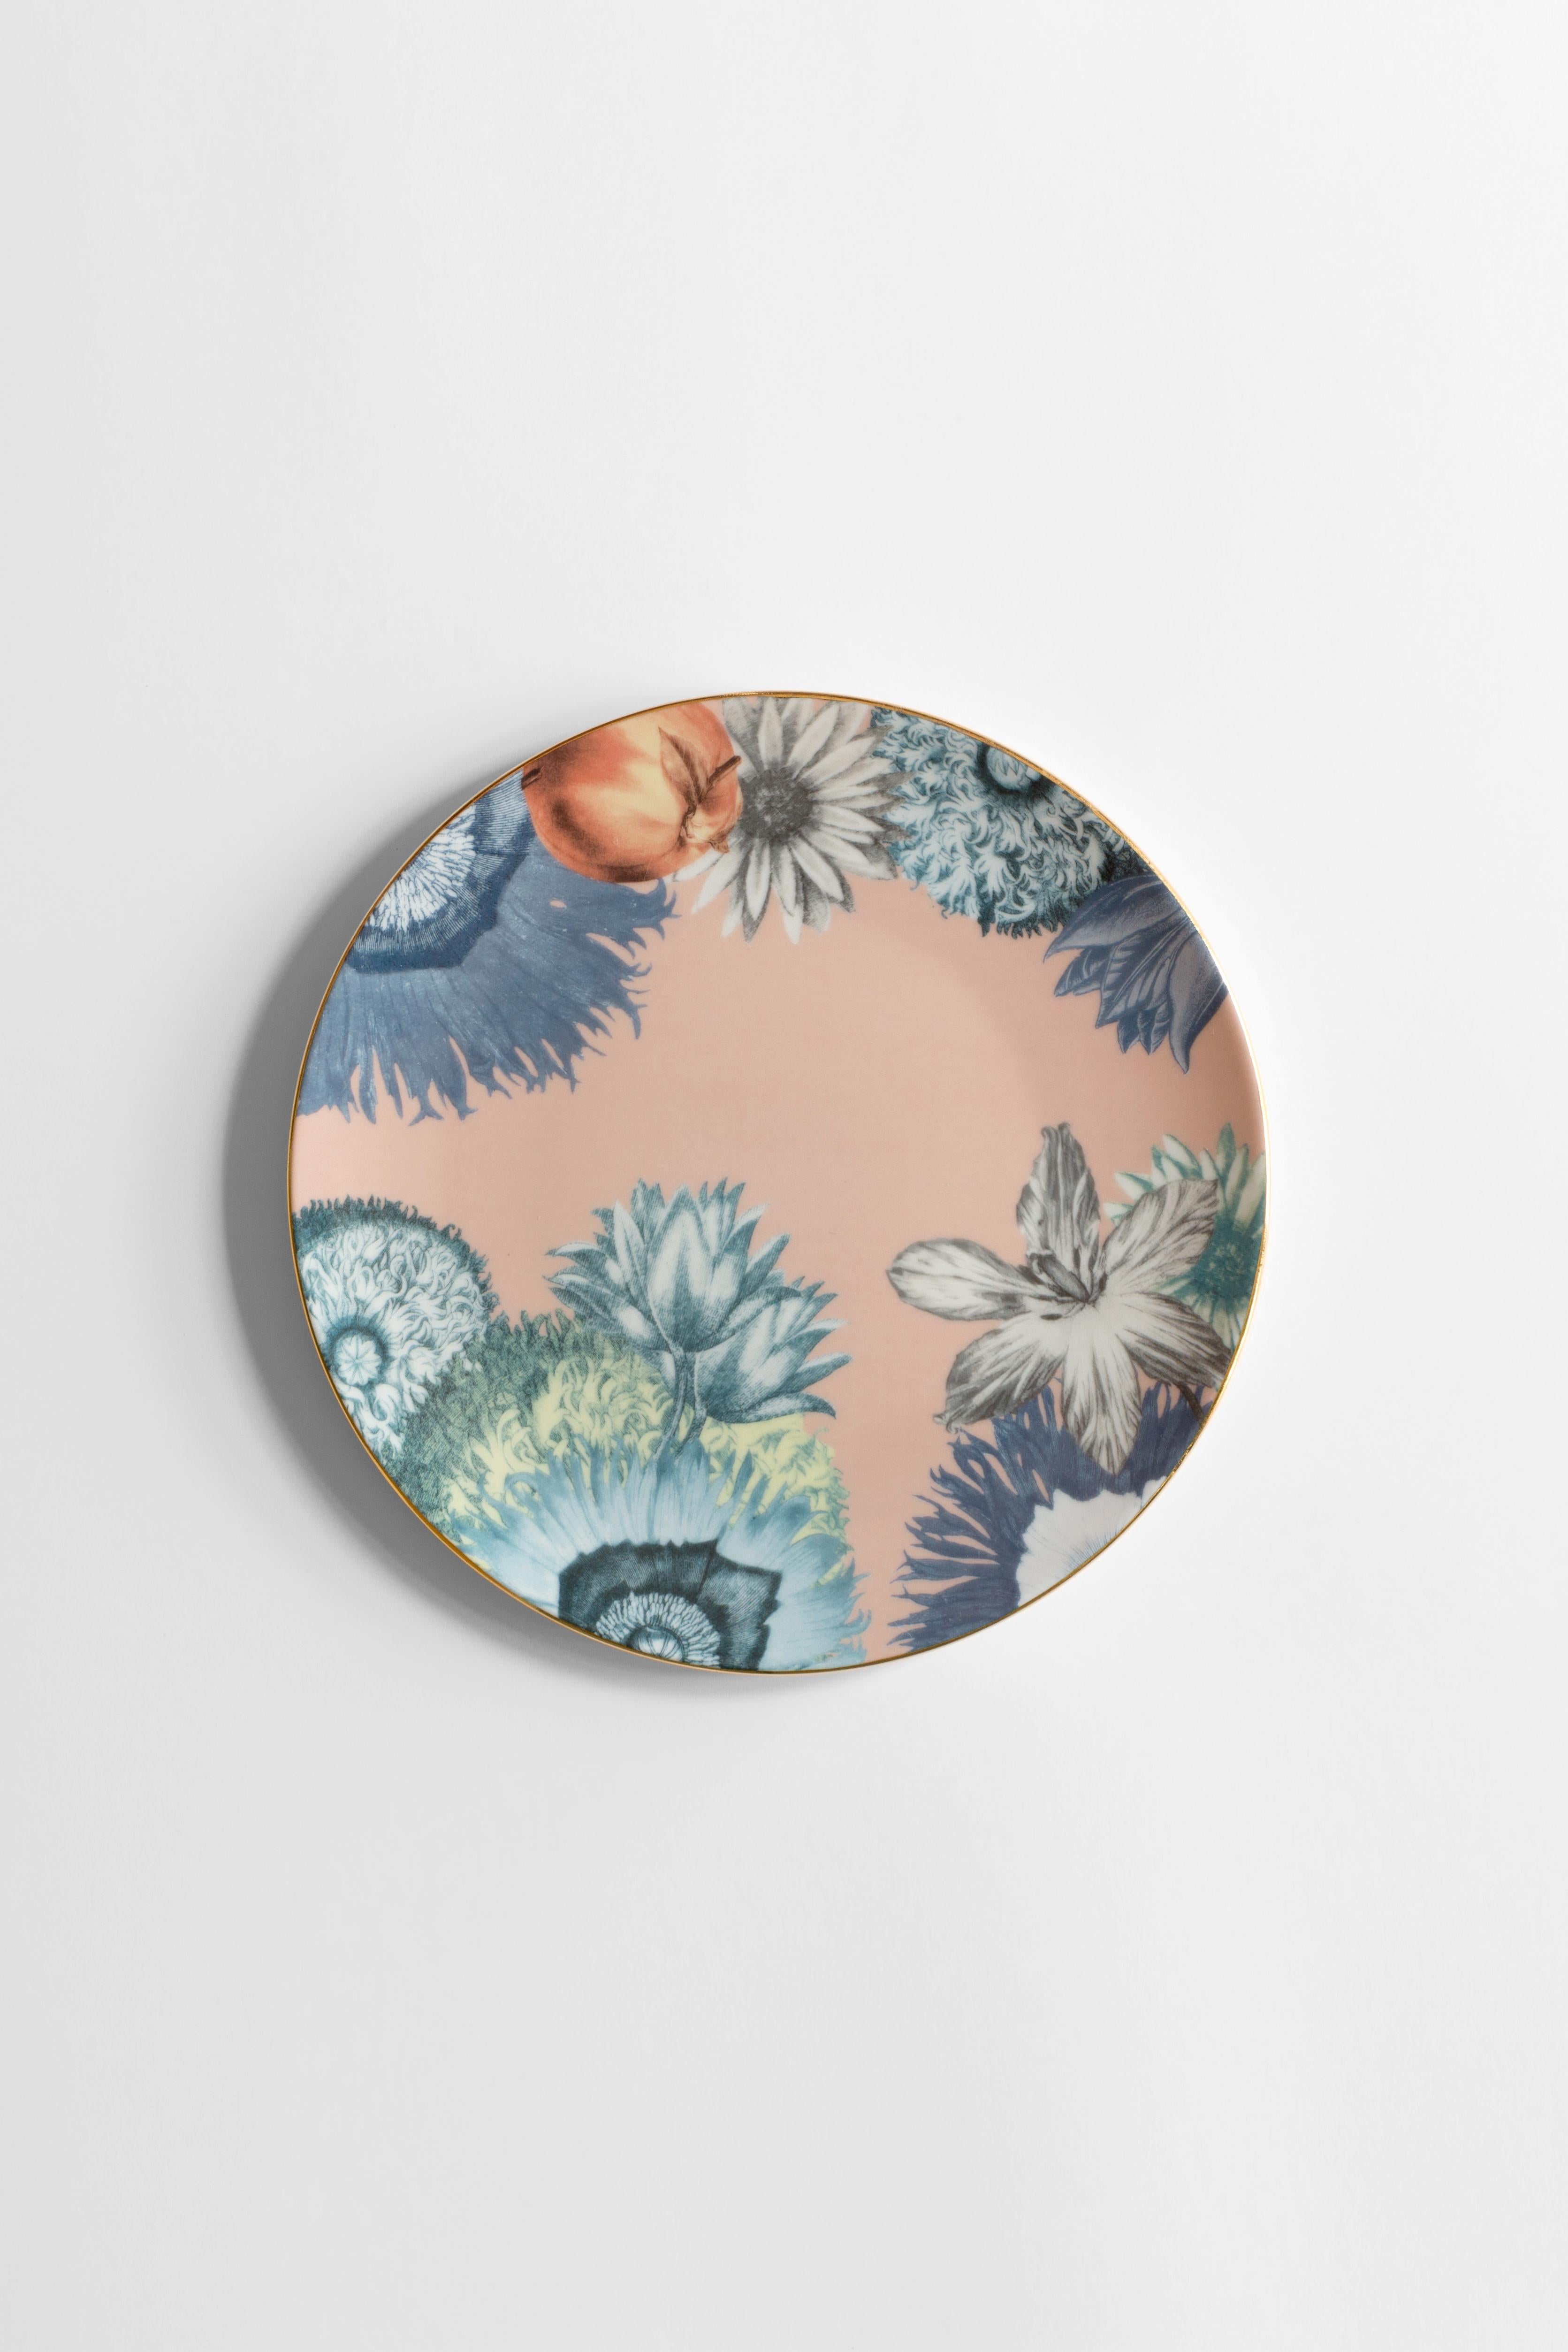 Italian Cairo, Six Contemporary Porcelain Dessert Plates with Decorative Design For Sale